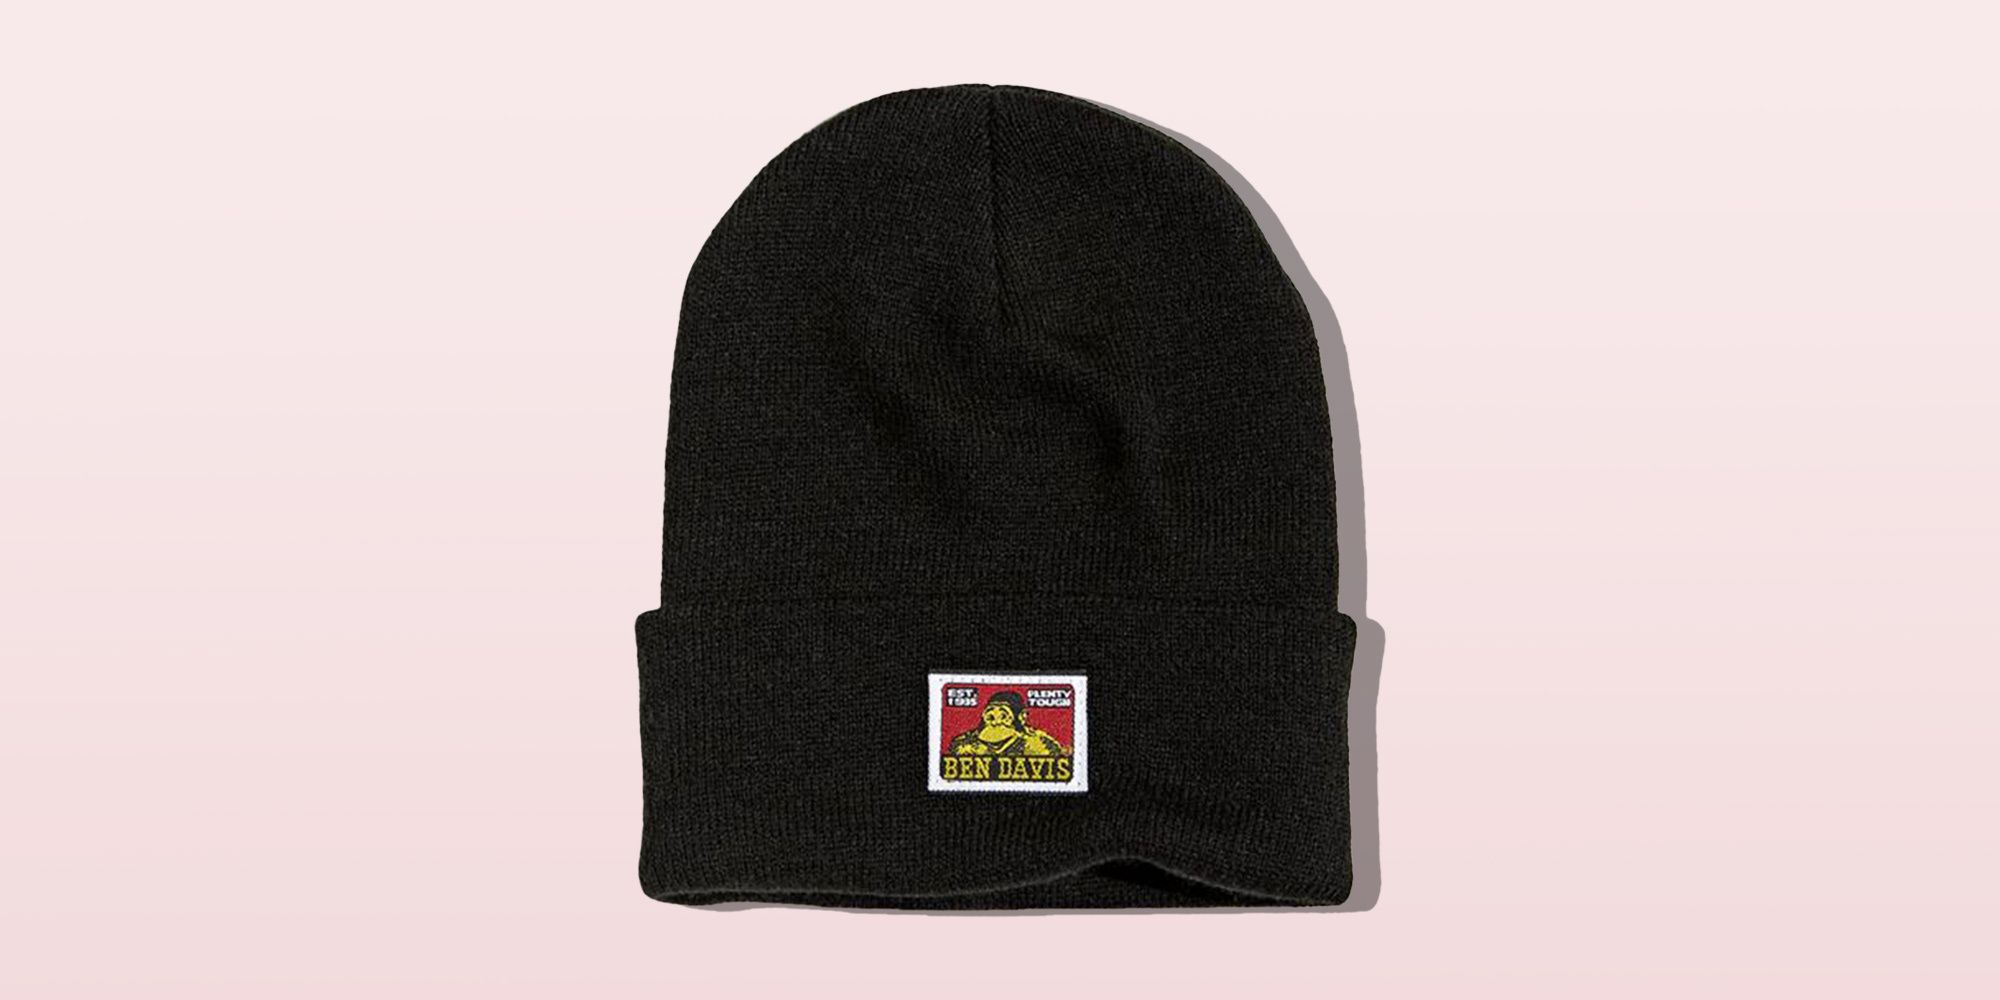 Cool Beanie Hats to Keep You Warm